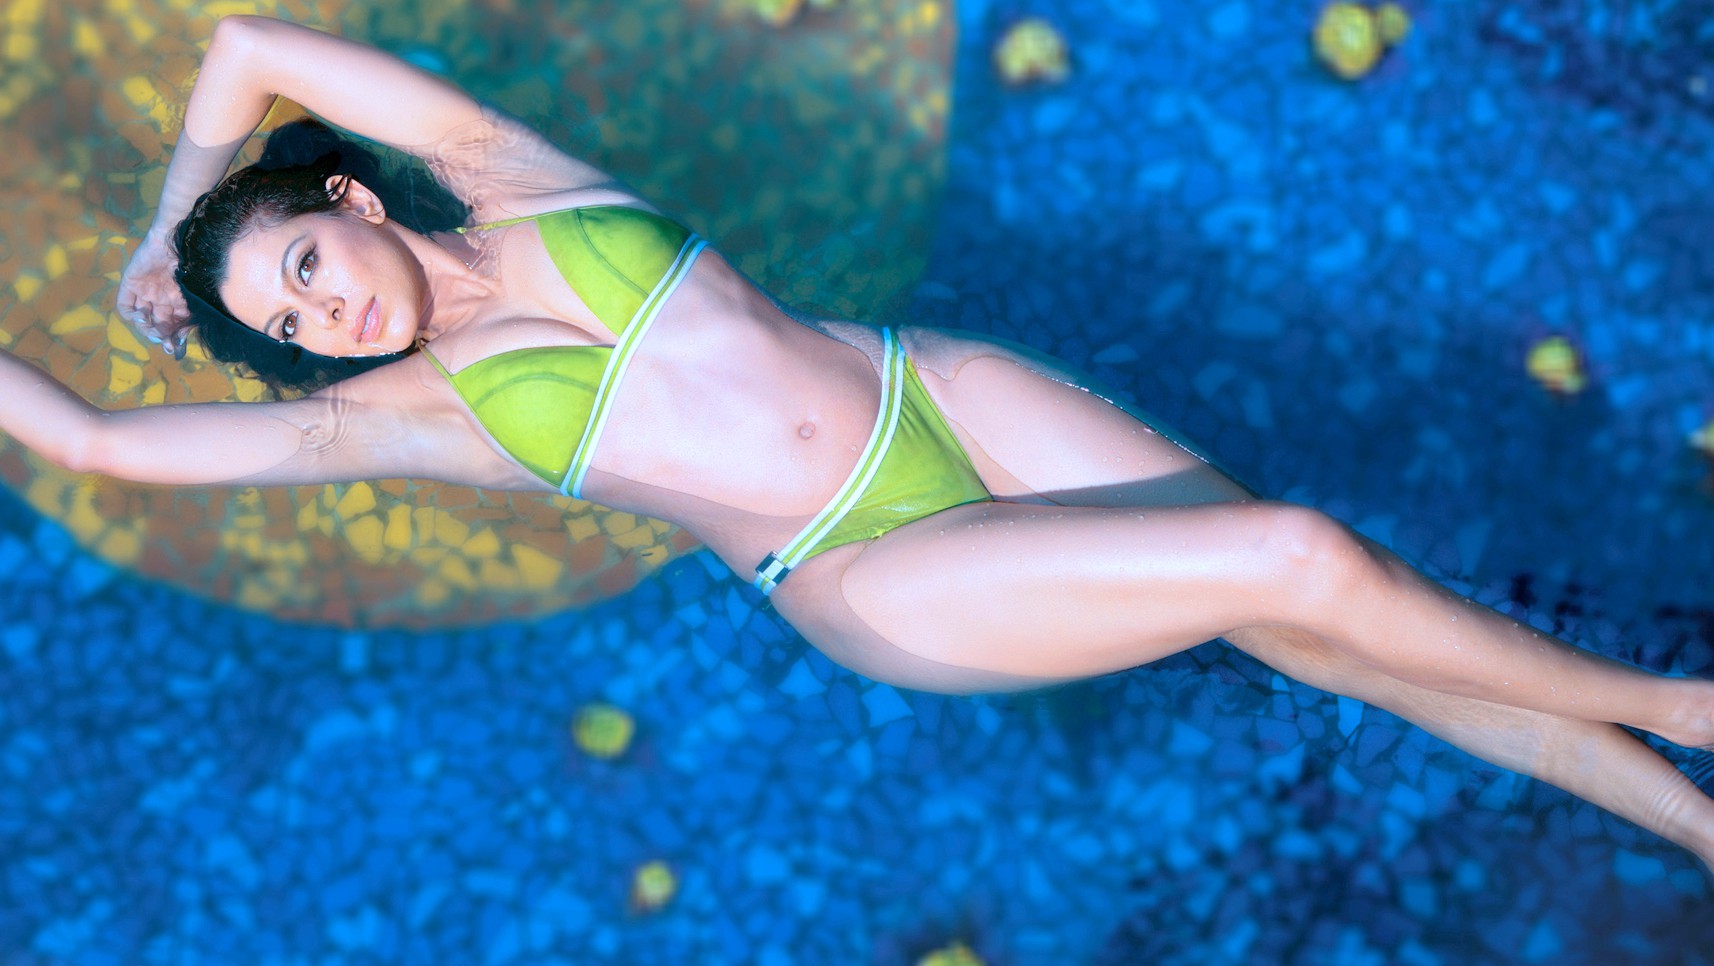 mandana karimi hot in bikini free awesome image for mobile